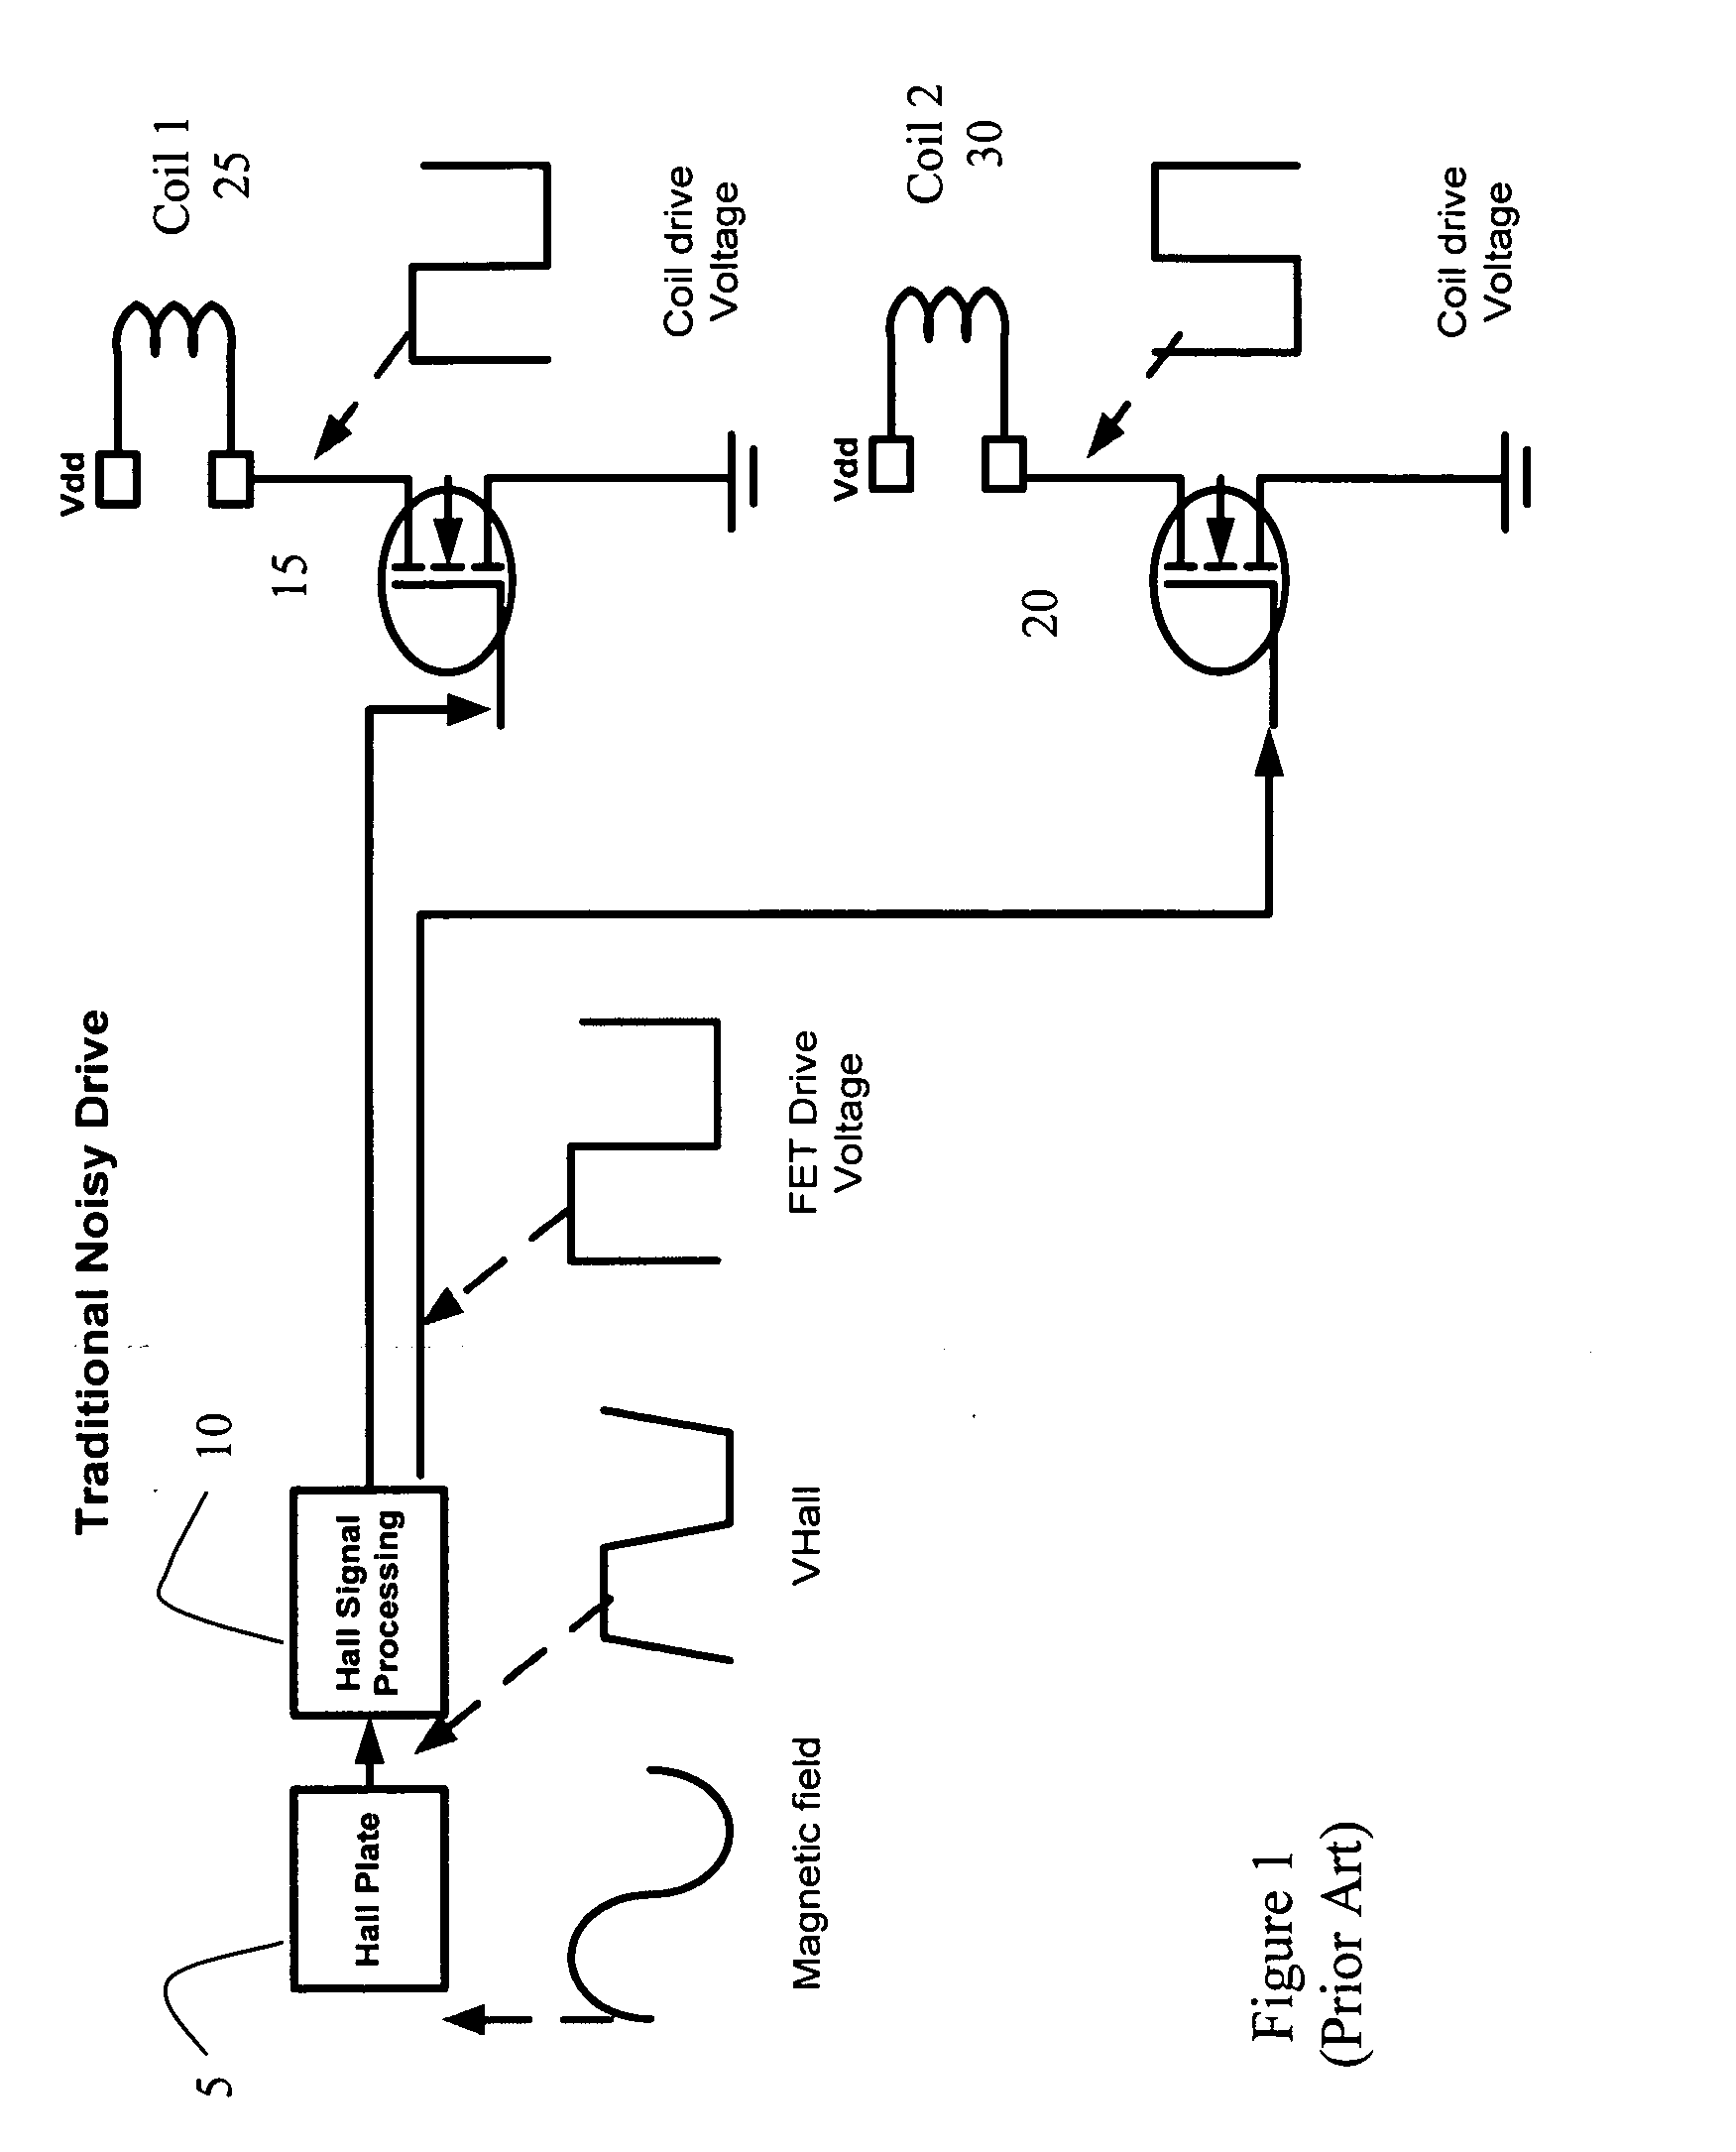 Digital noise reduction for motors